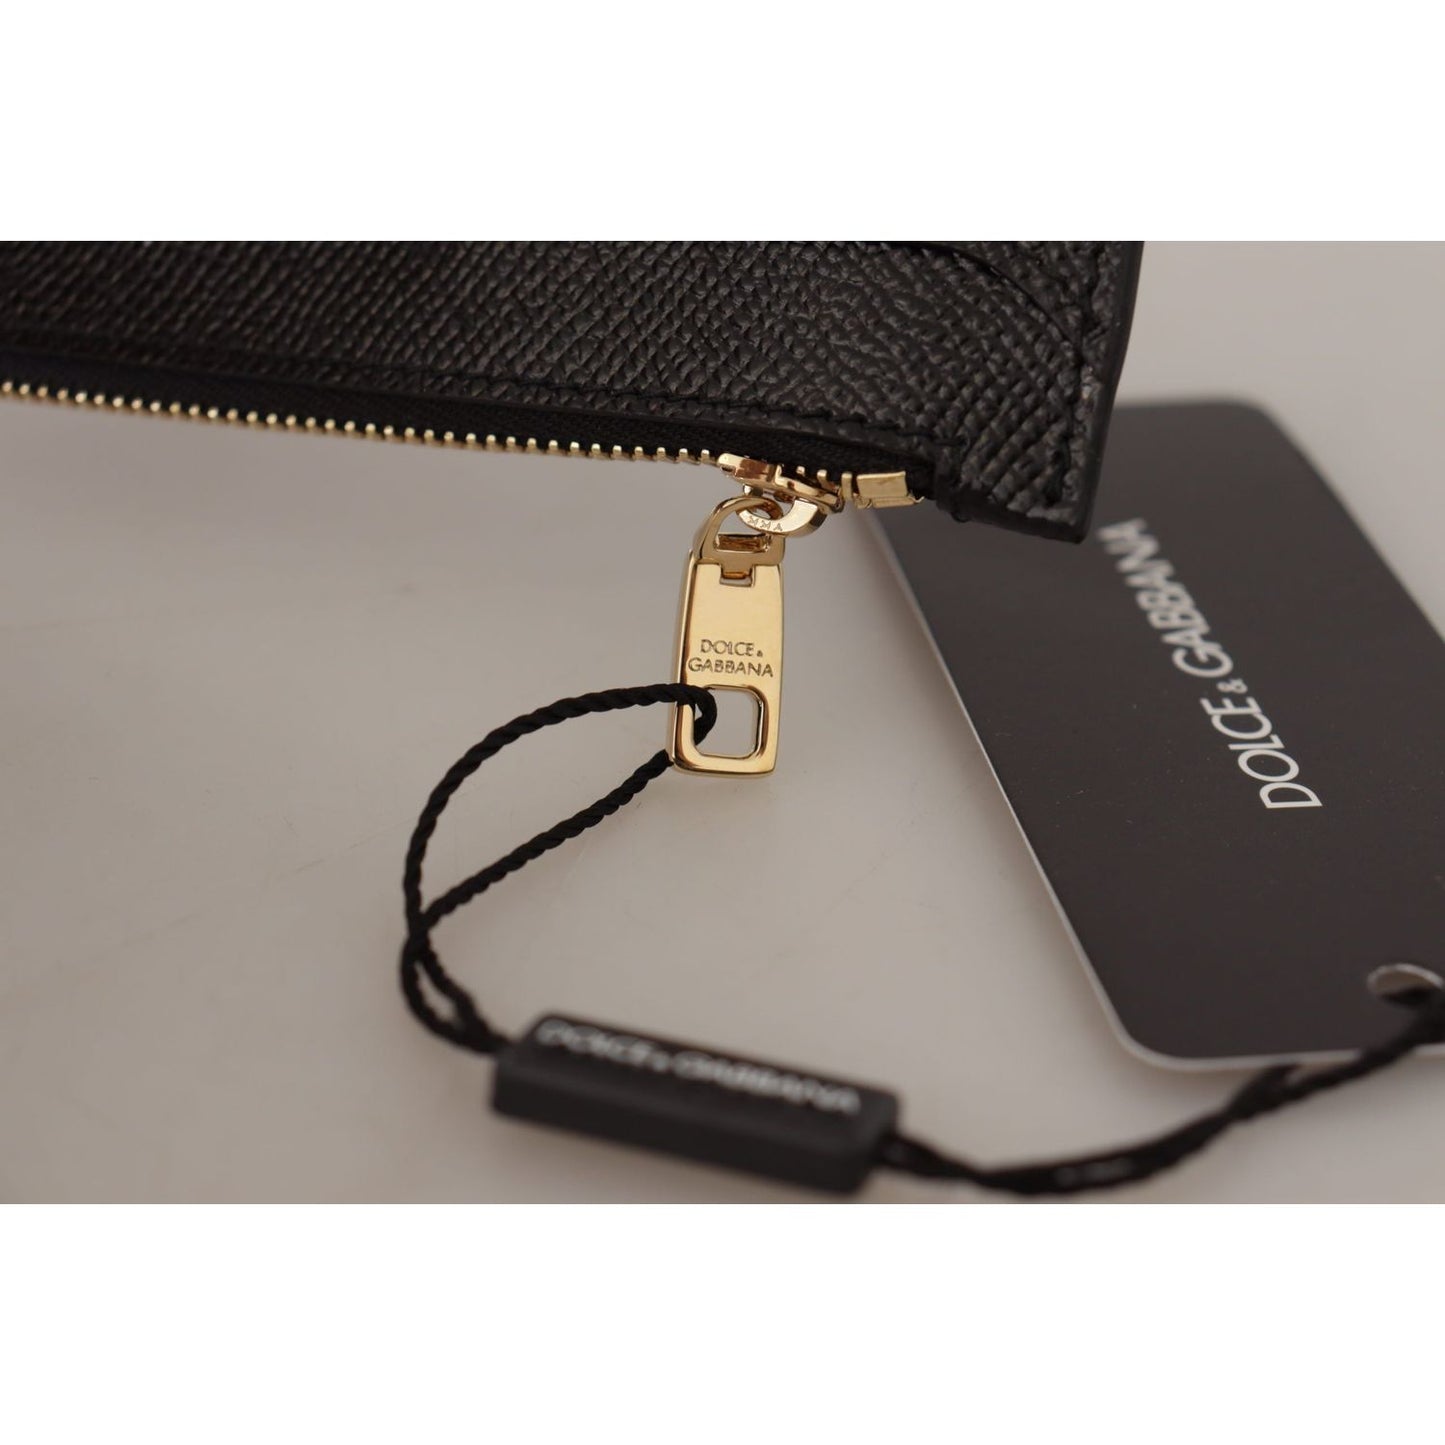 Dolce & Gabbana Elegant Leather Coin Wallet with Zip Closure black-leather-dgloveslondon-women-cardholder-coin-case-wallet